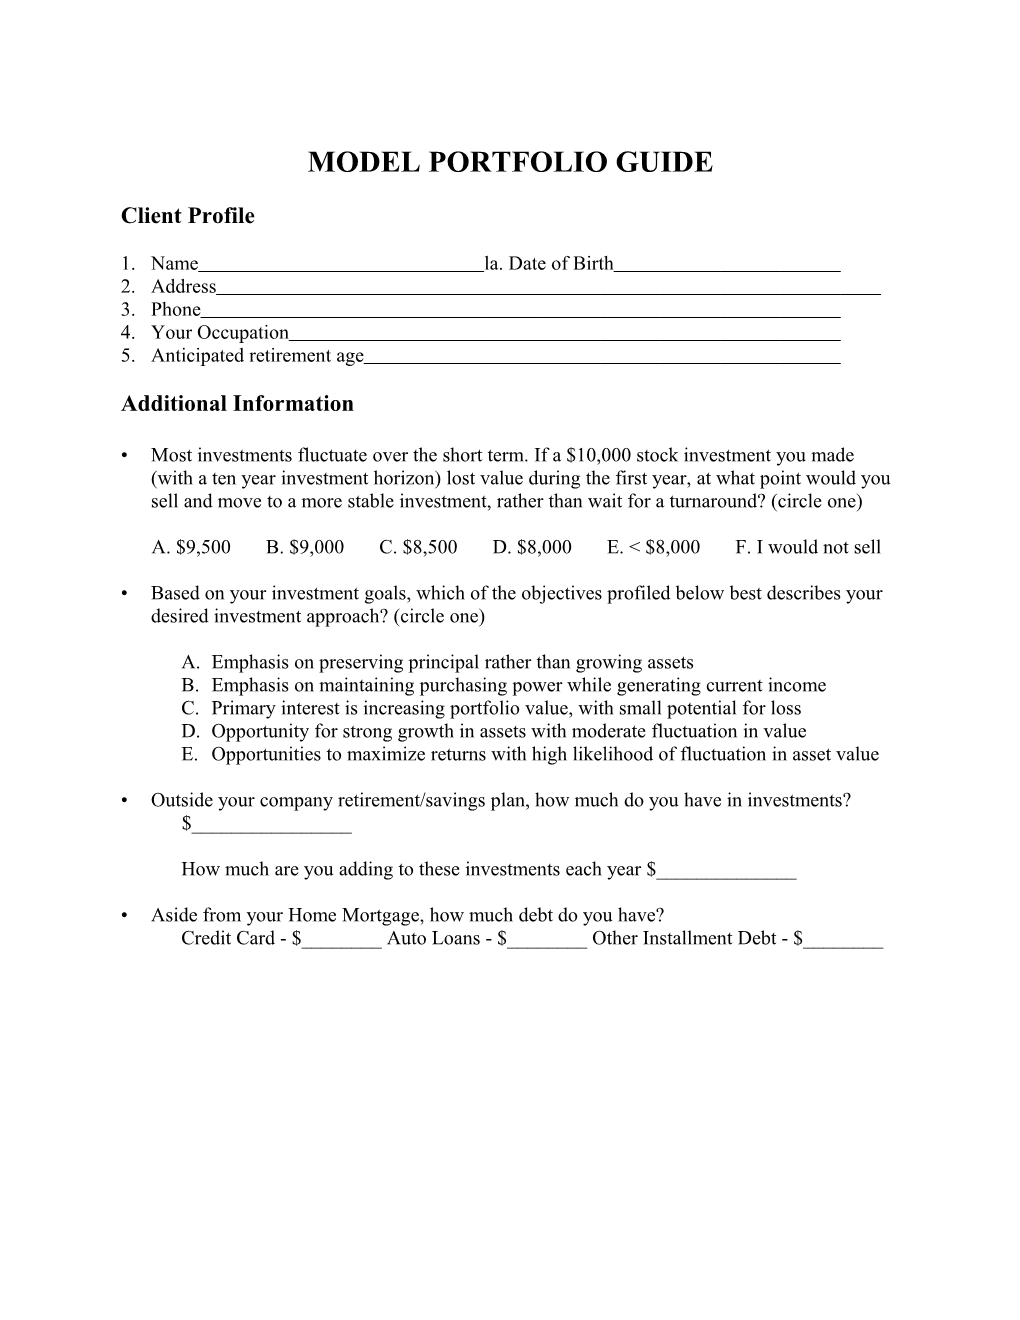 Model Portfolio Guide